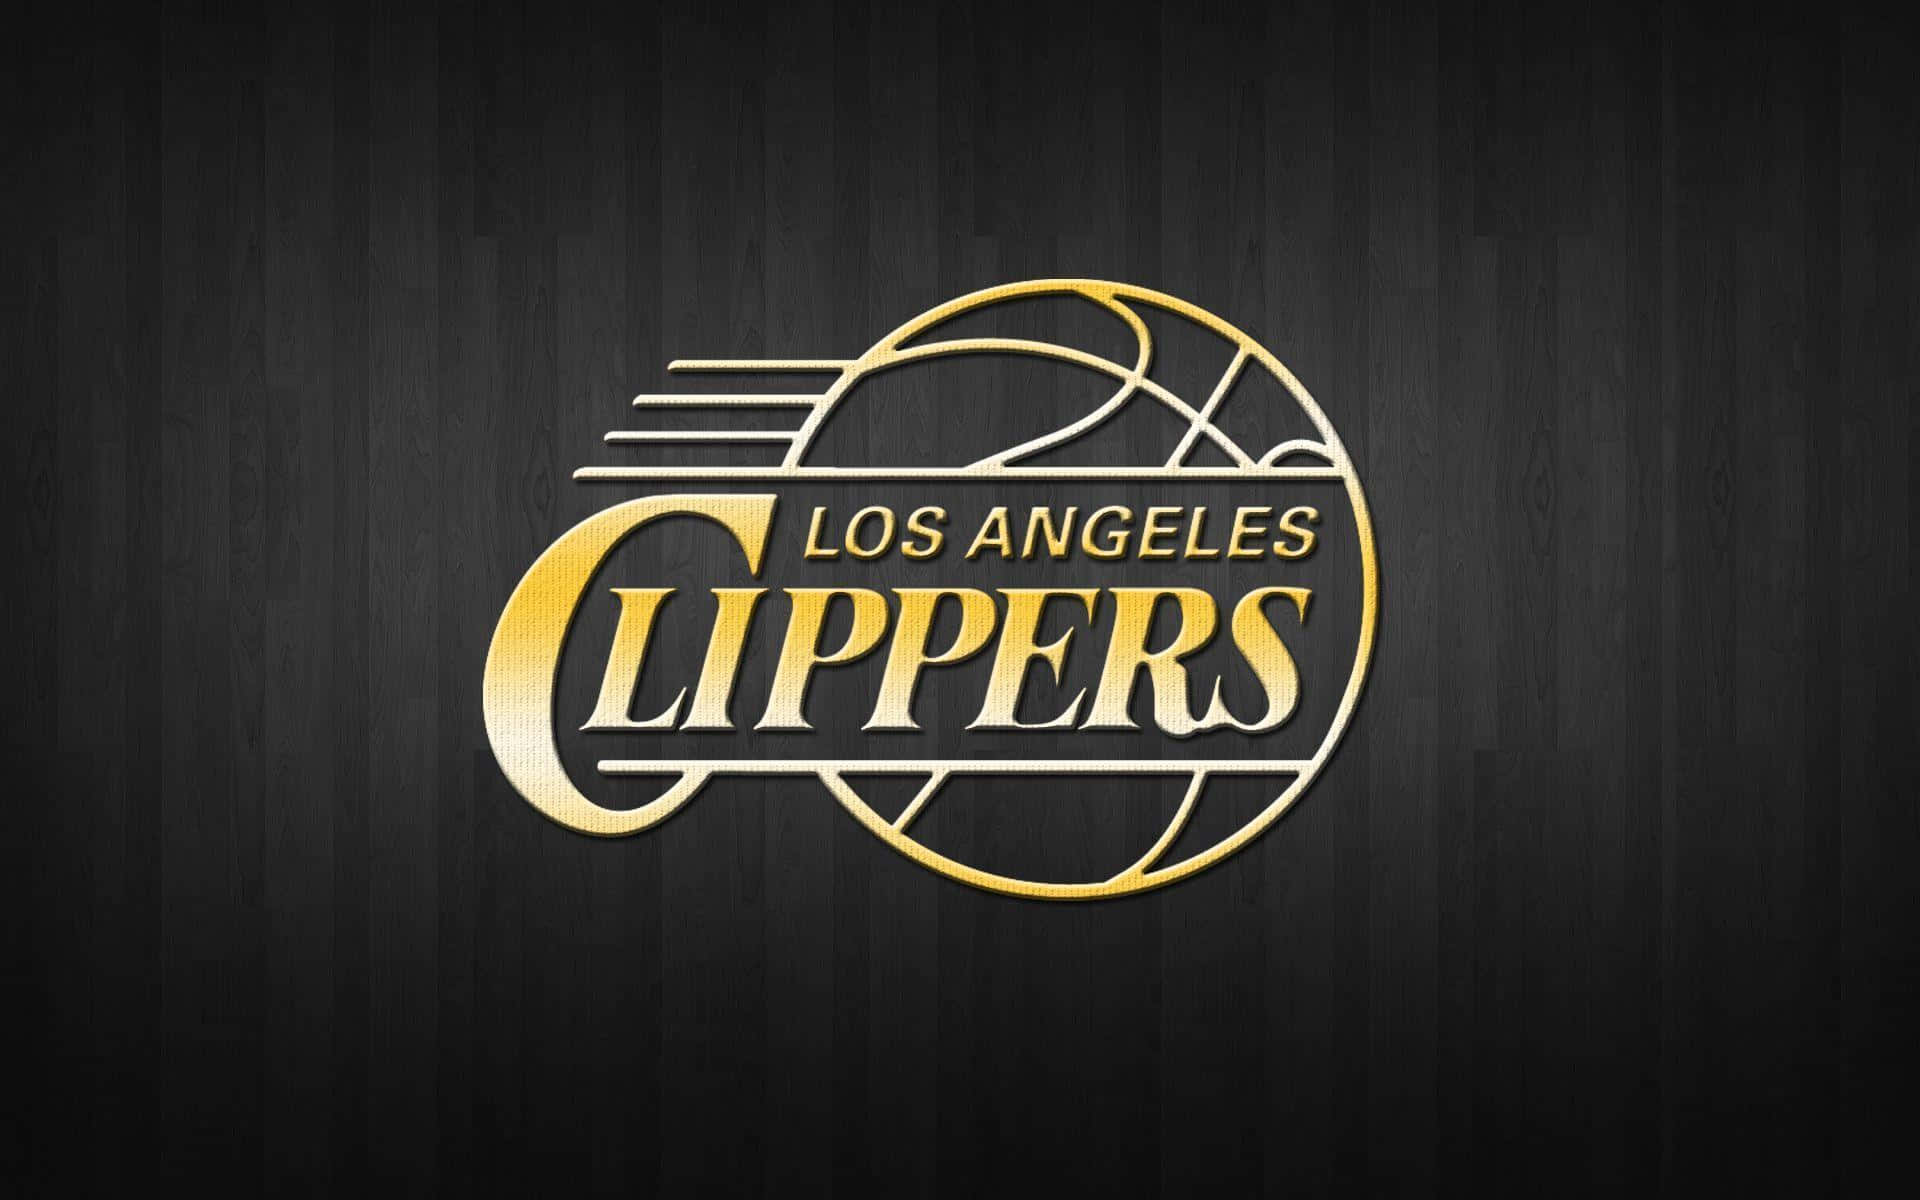 Gold Basketball Team LA Clippers Logo Digital Art Wallpaper